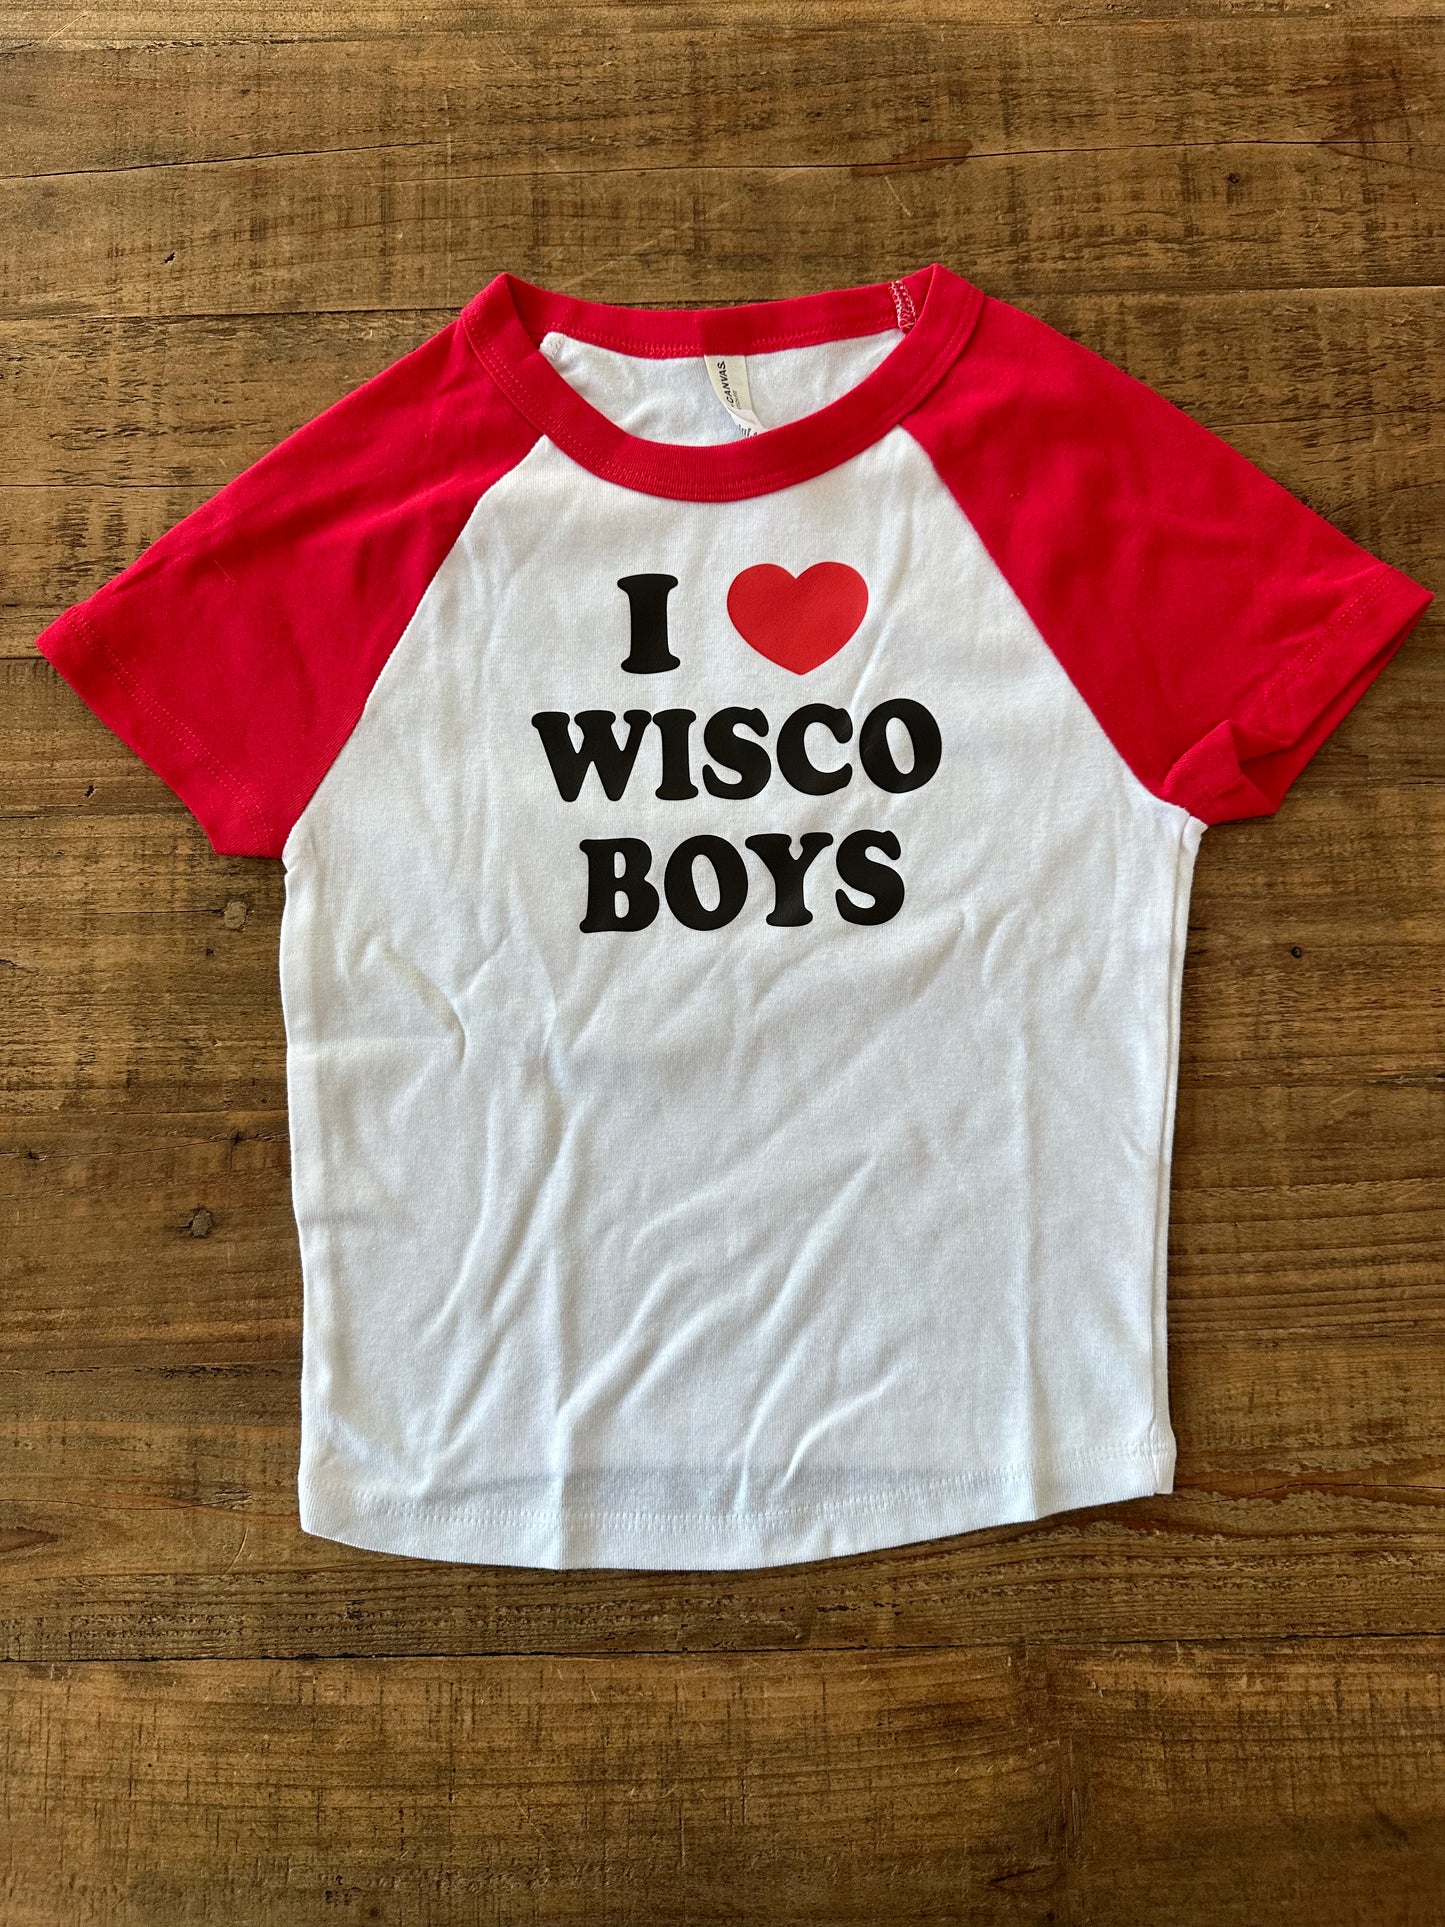 Wisco Boys Baseball Tee